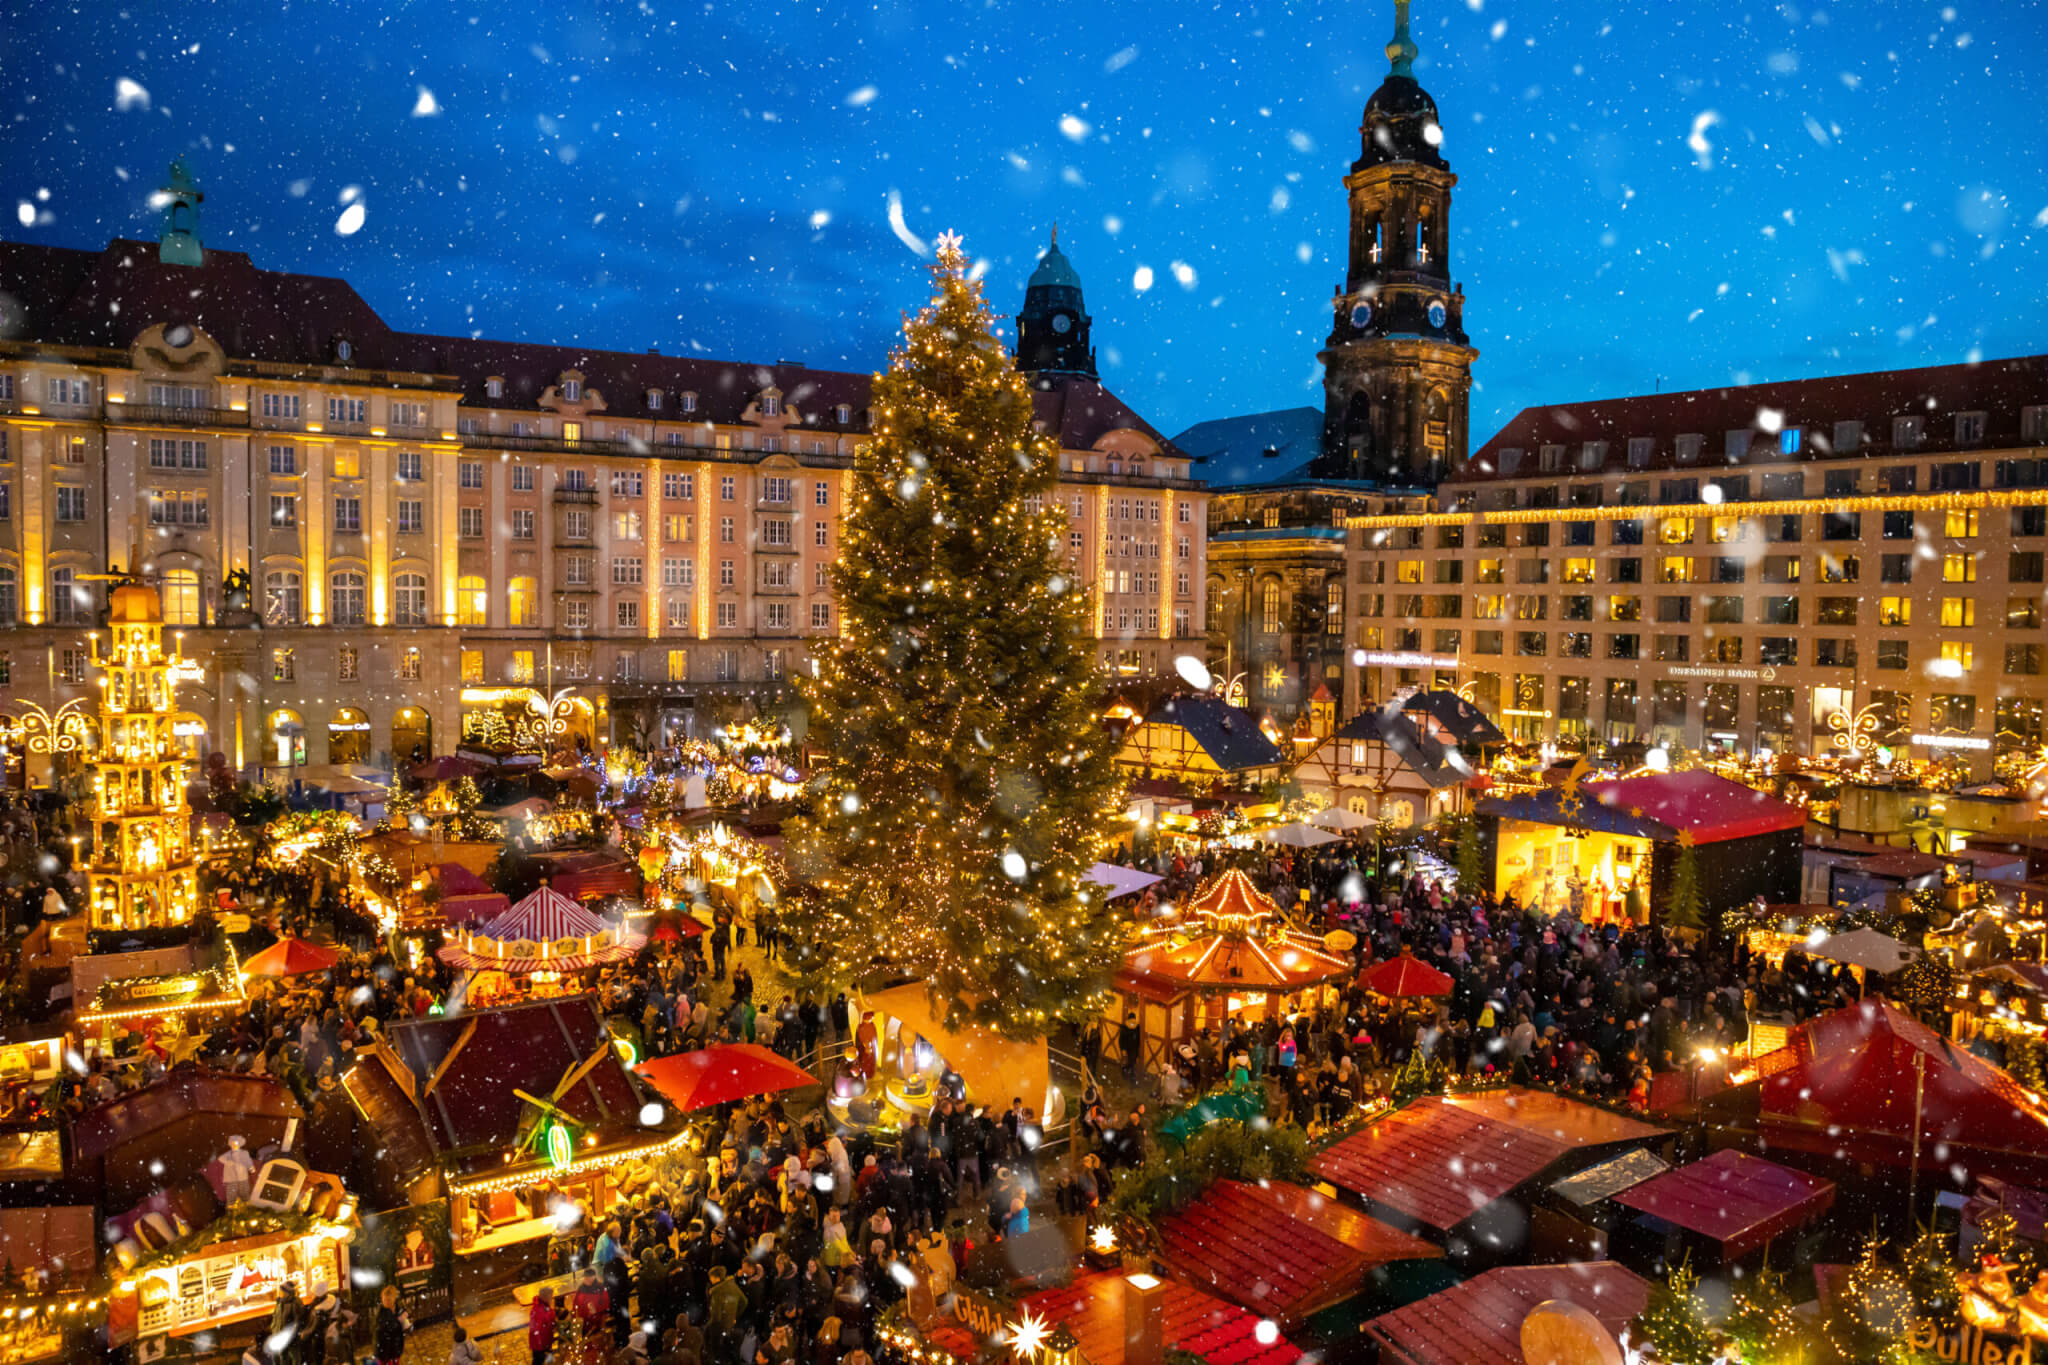 People visit Christmas Market Striezelmarkt in Dresden, Germany